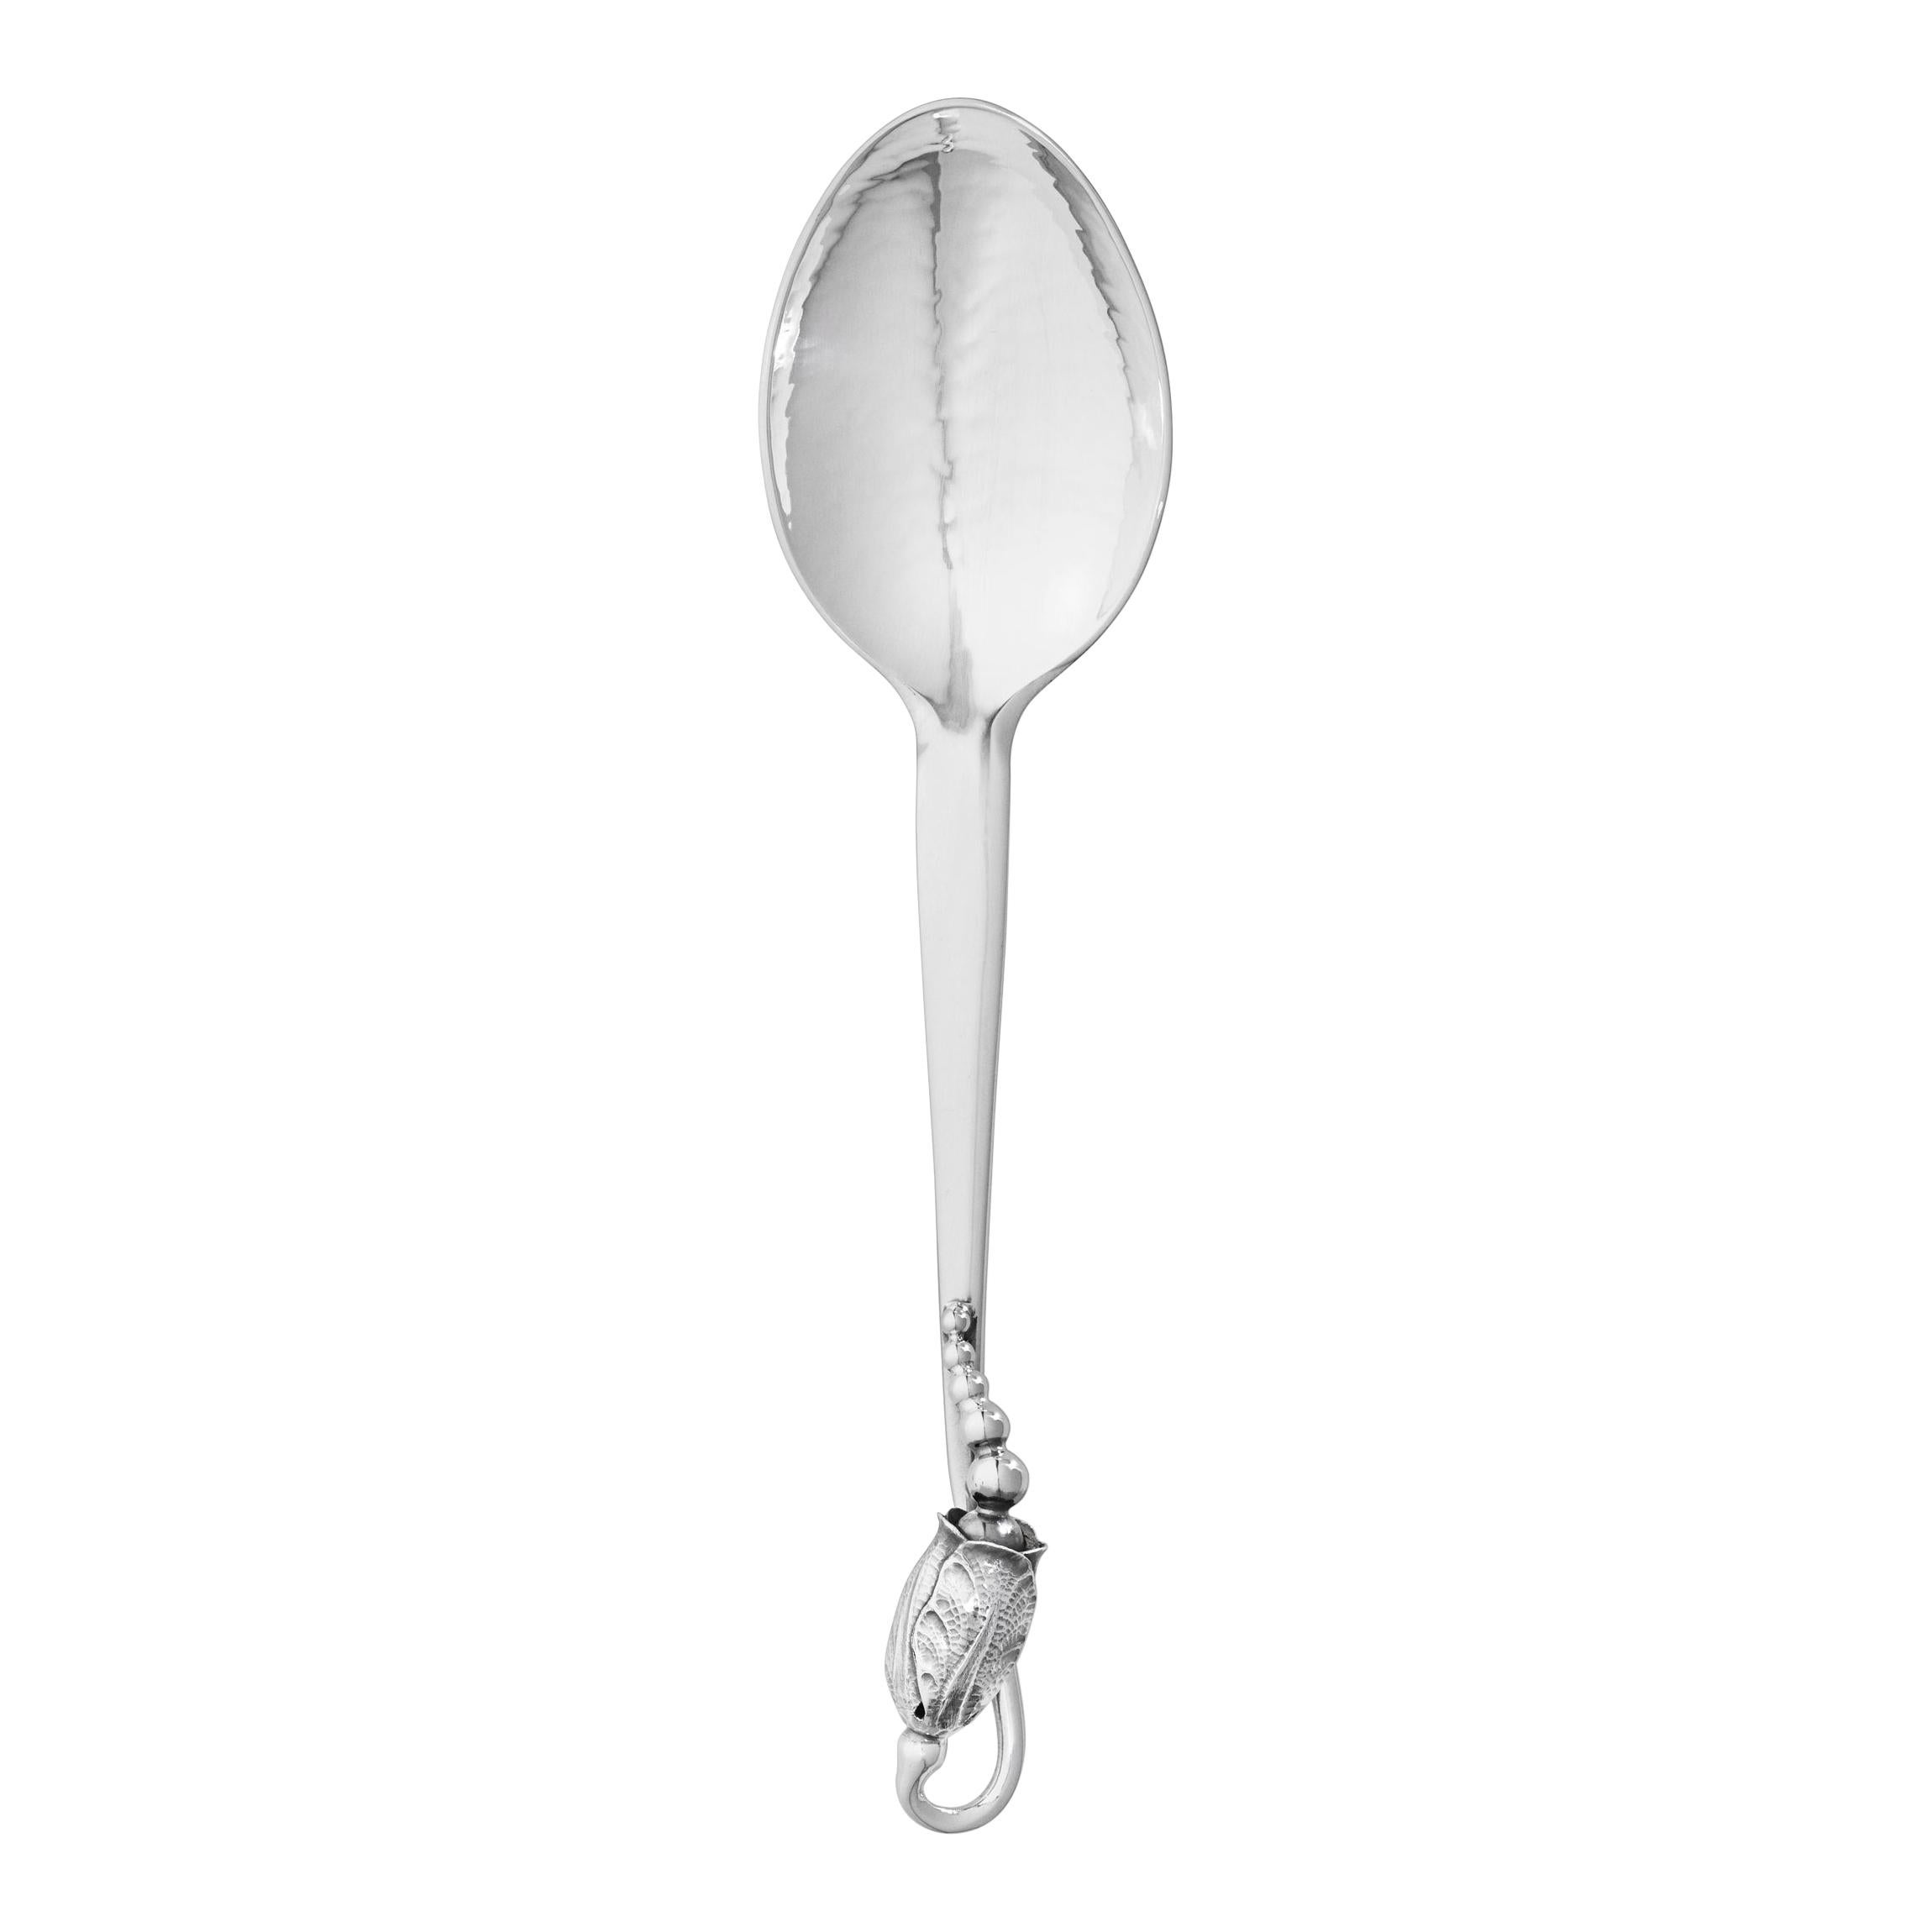 Georg Jensen Handcrafted Sterling Silver Blossom Dessert Spoon